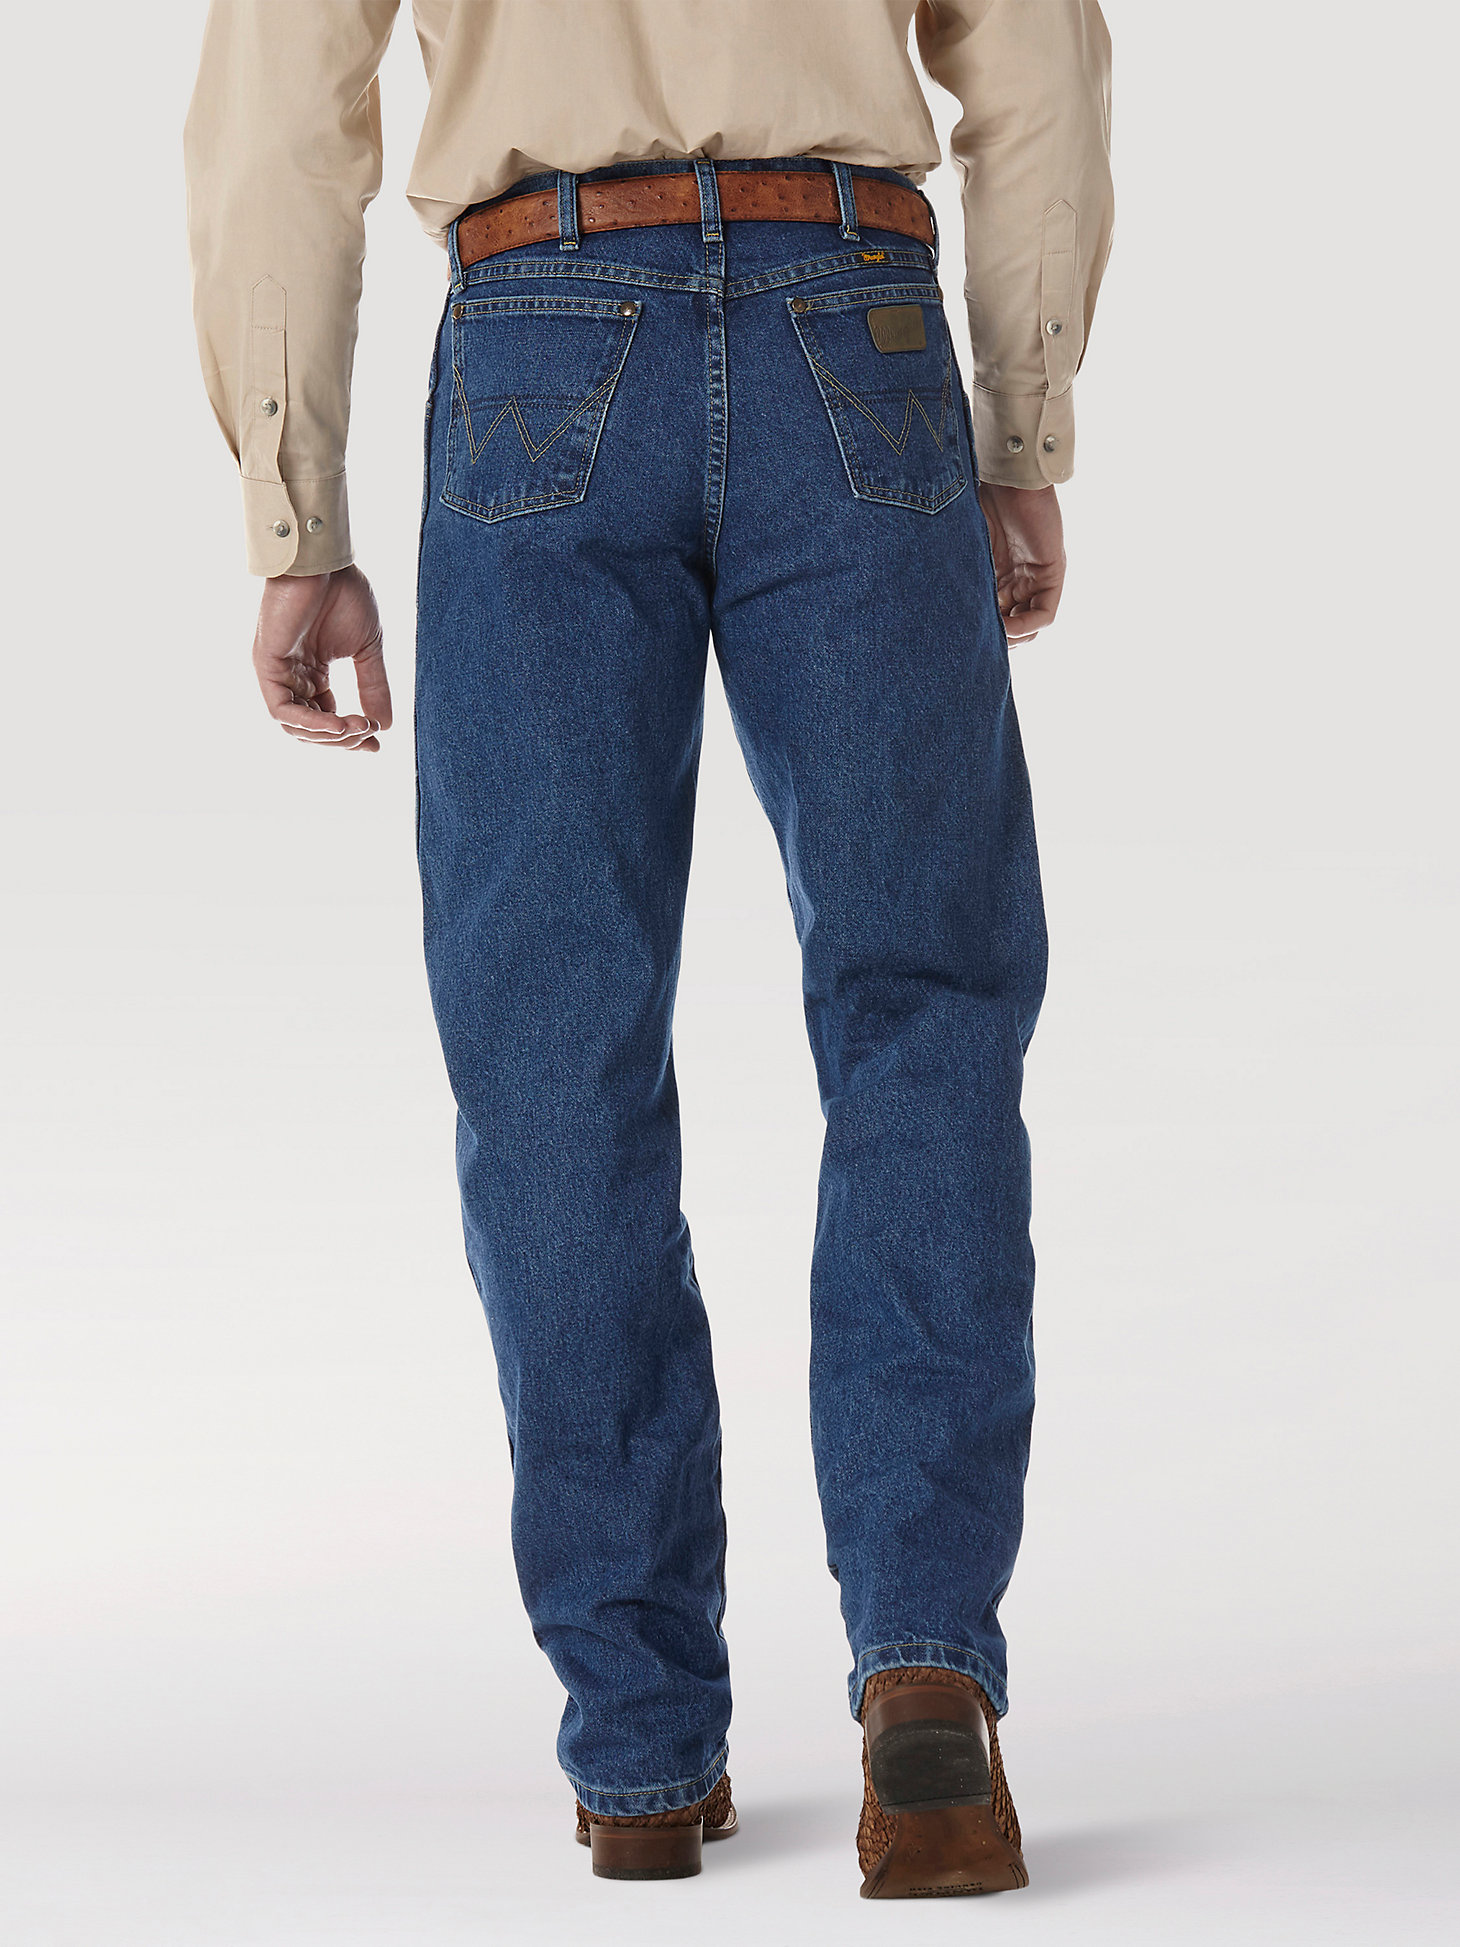 George Strait Cowboy Cut® Relaxed Fit Jean in Heavyweight Stone Denim alternative view 2